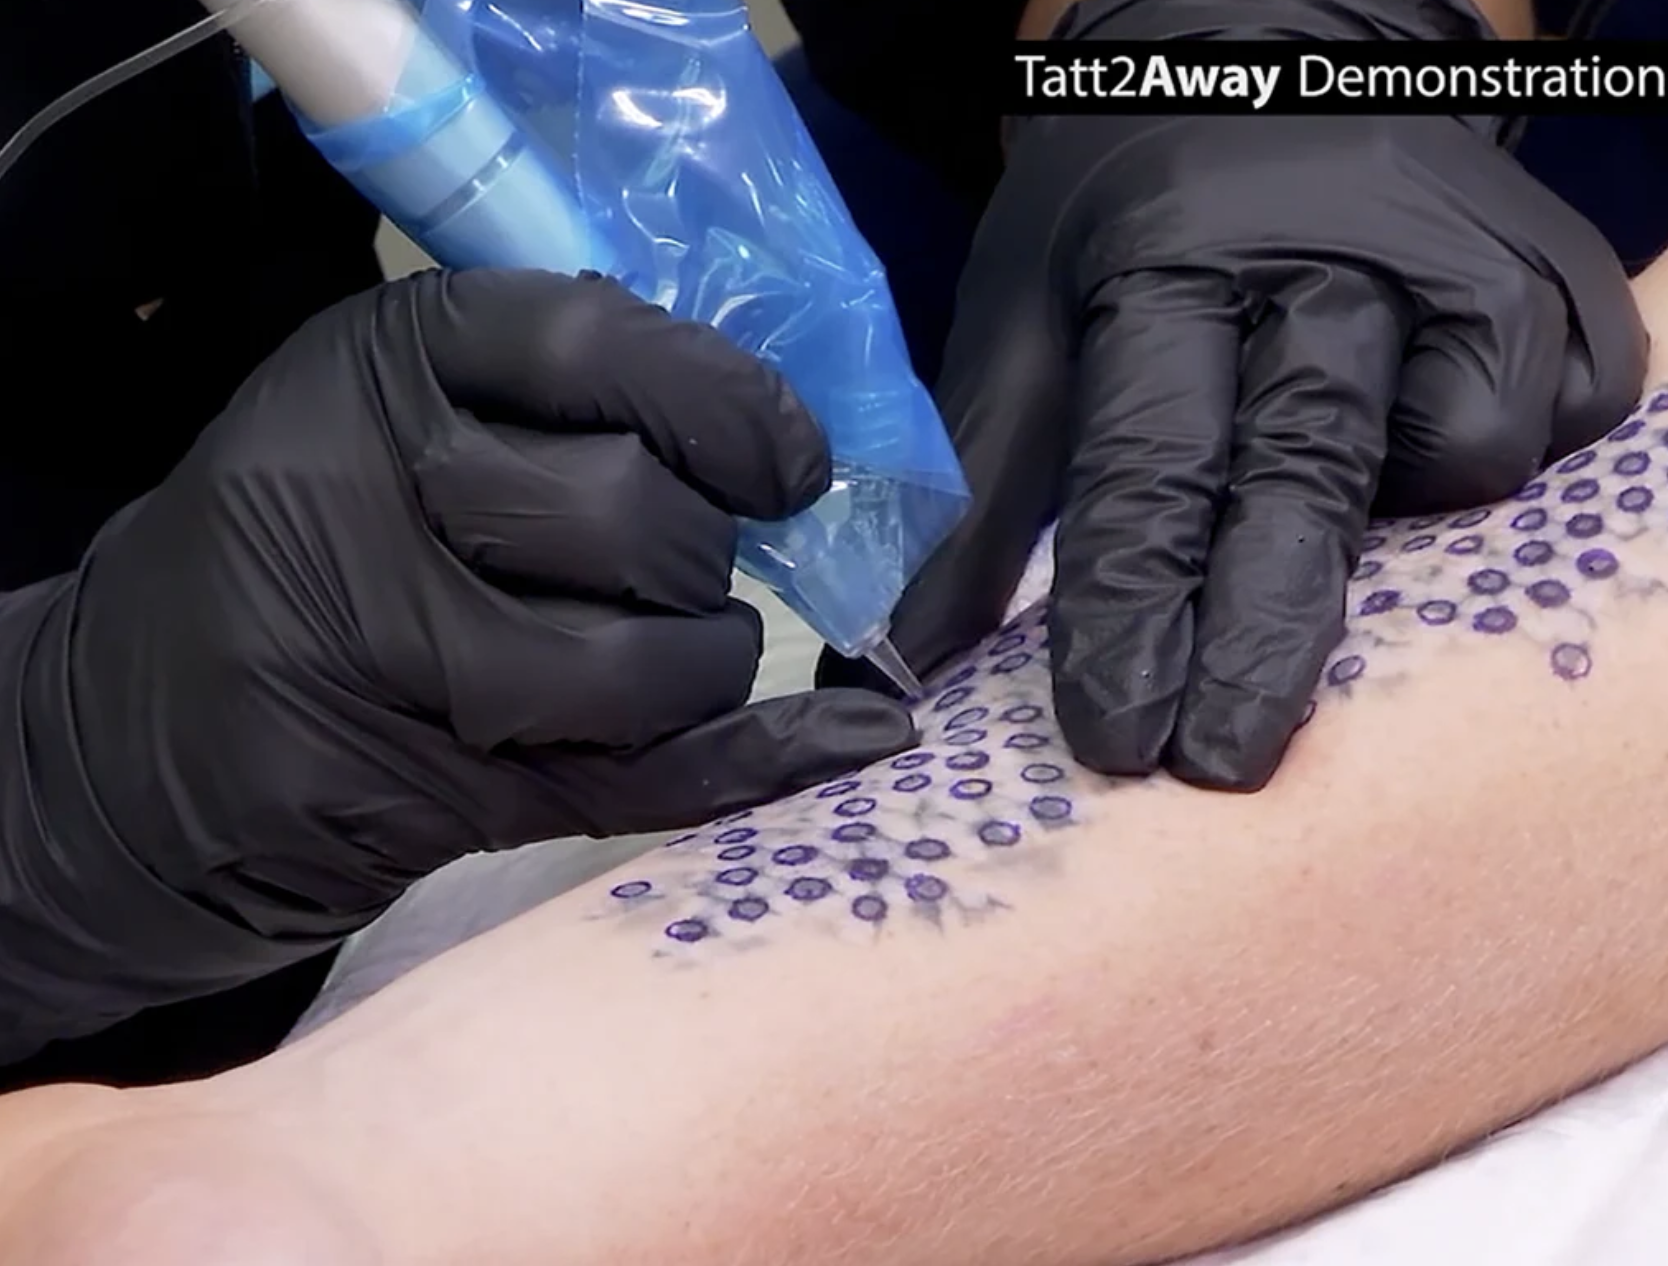 Should You Consider Laser Tattoo Removal? - Tatt2Away